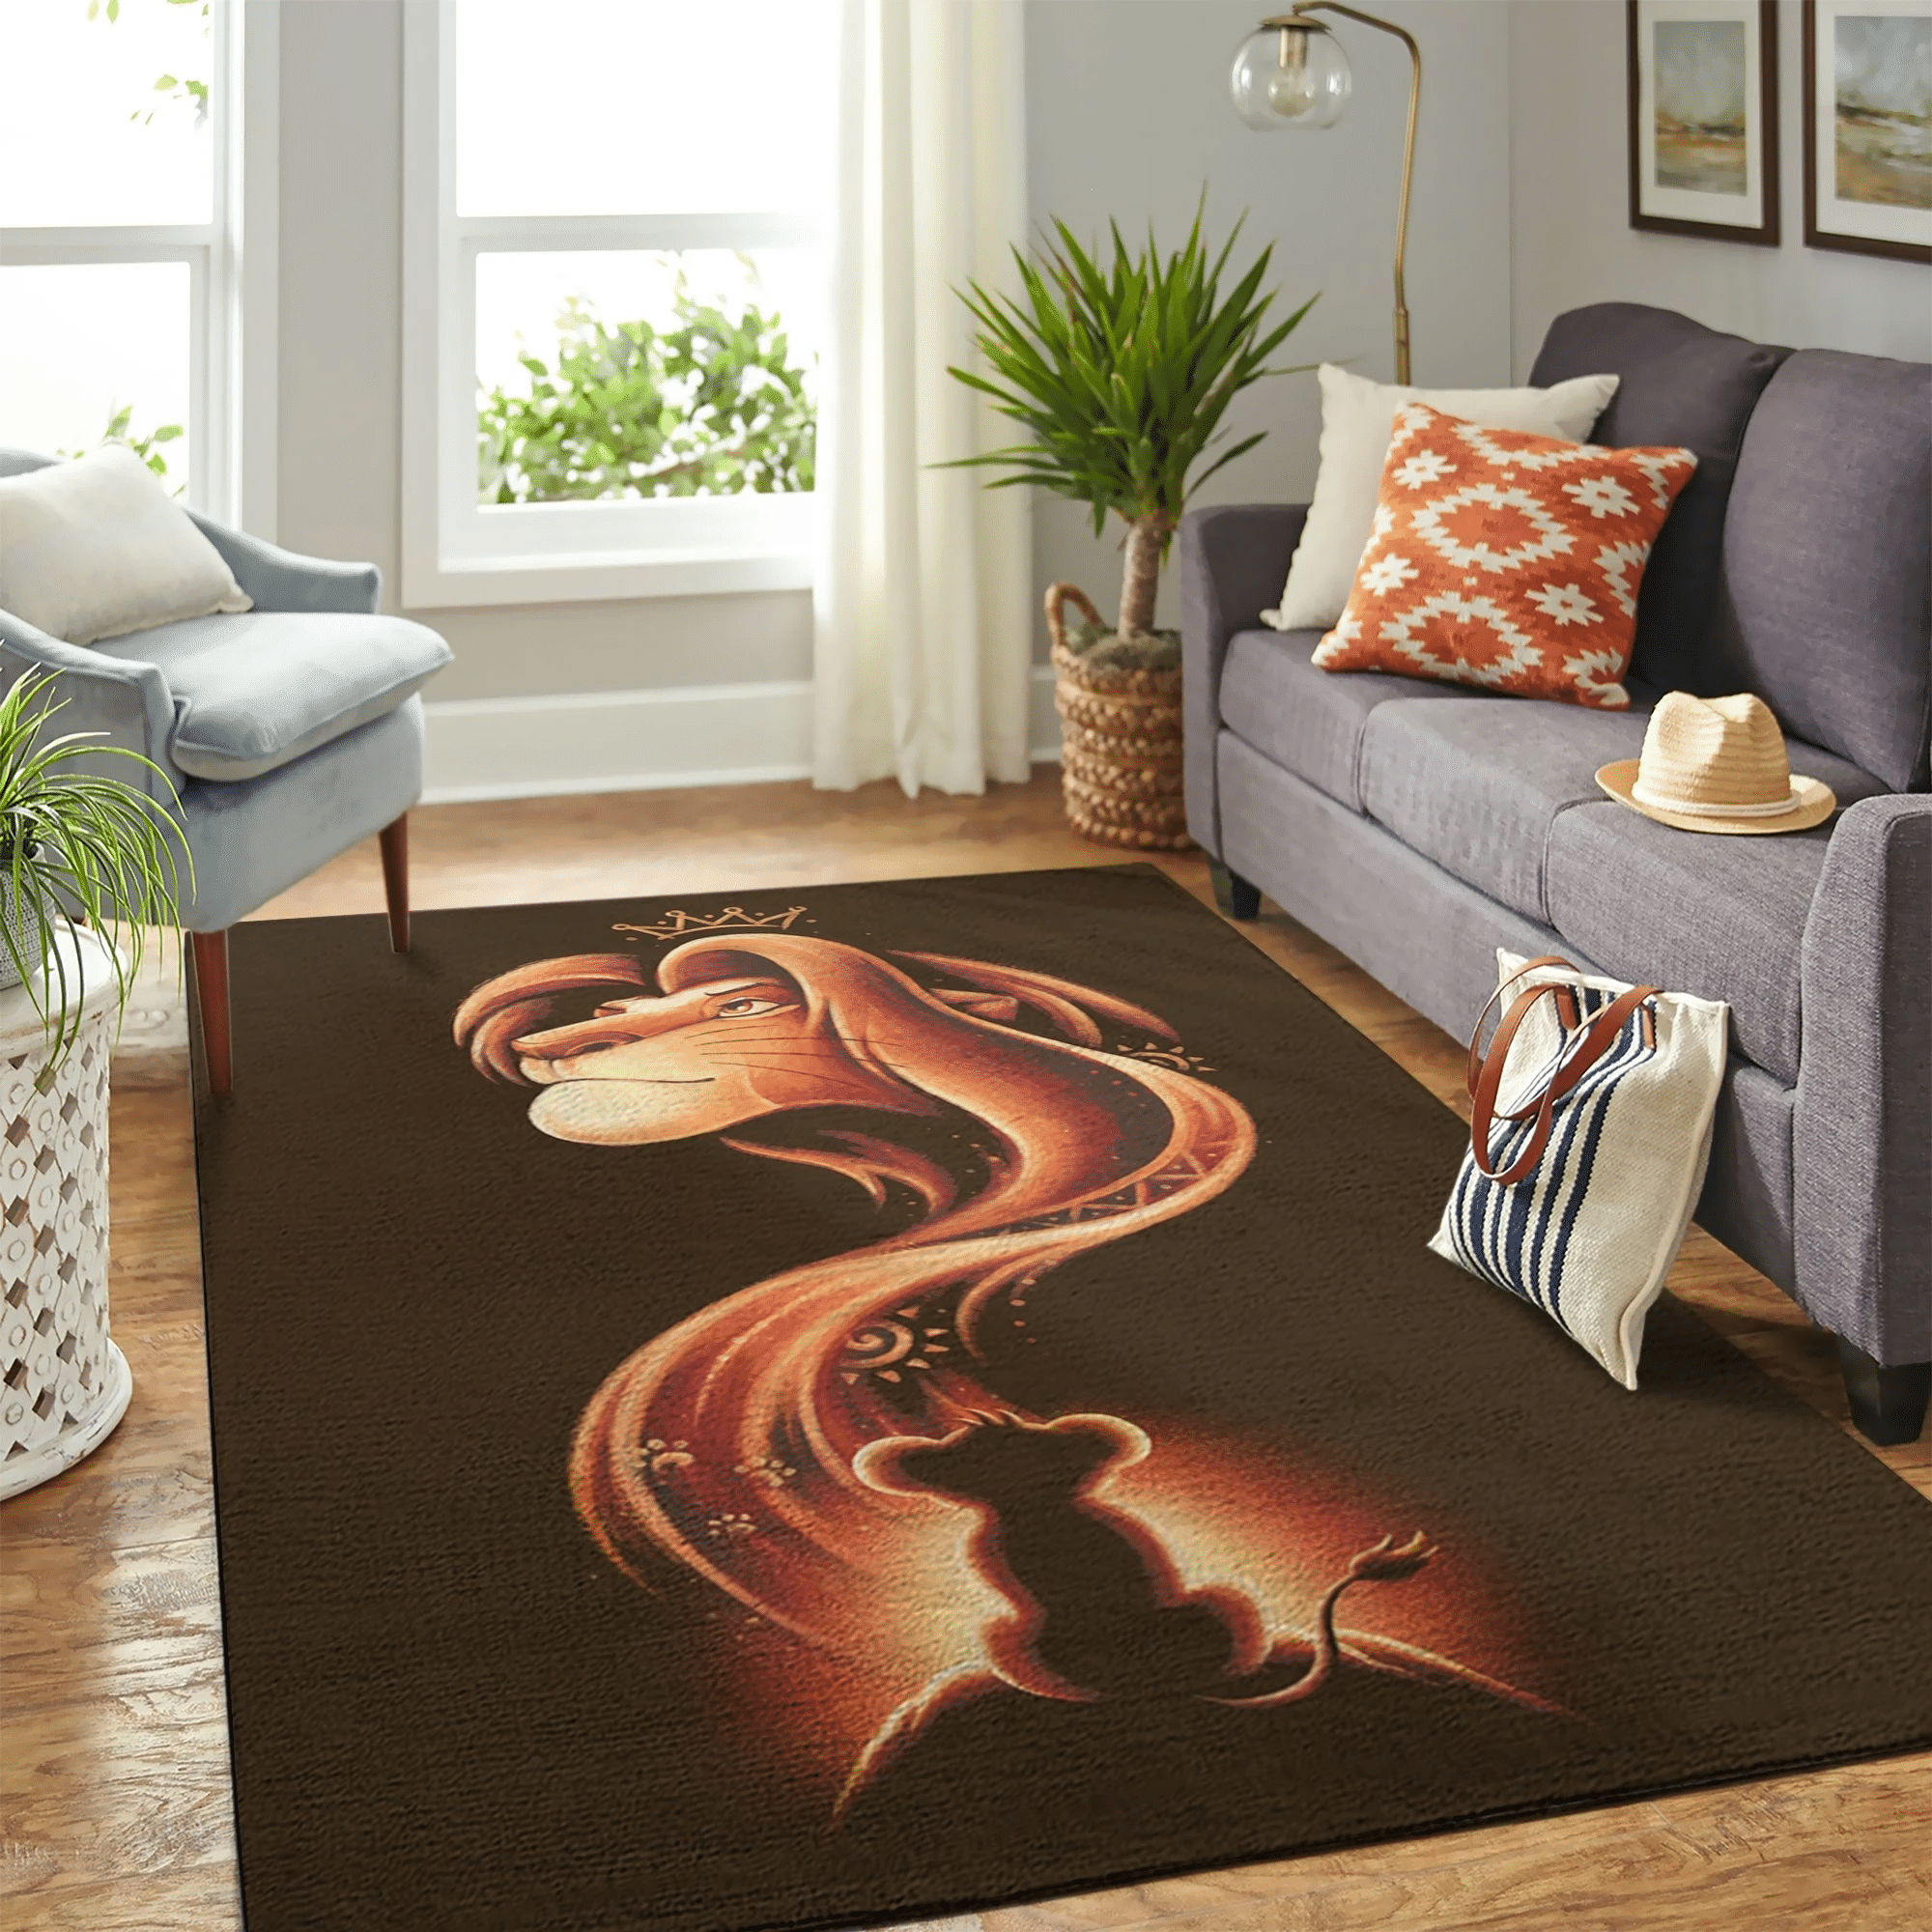 Simba Lion King Carpet Rug Chrismas Gift - Indoor Outdoor Rugs